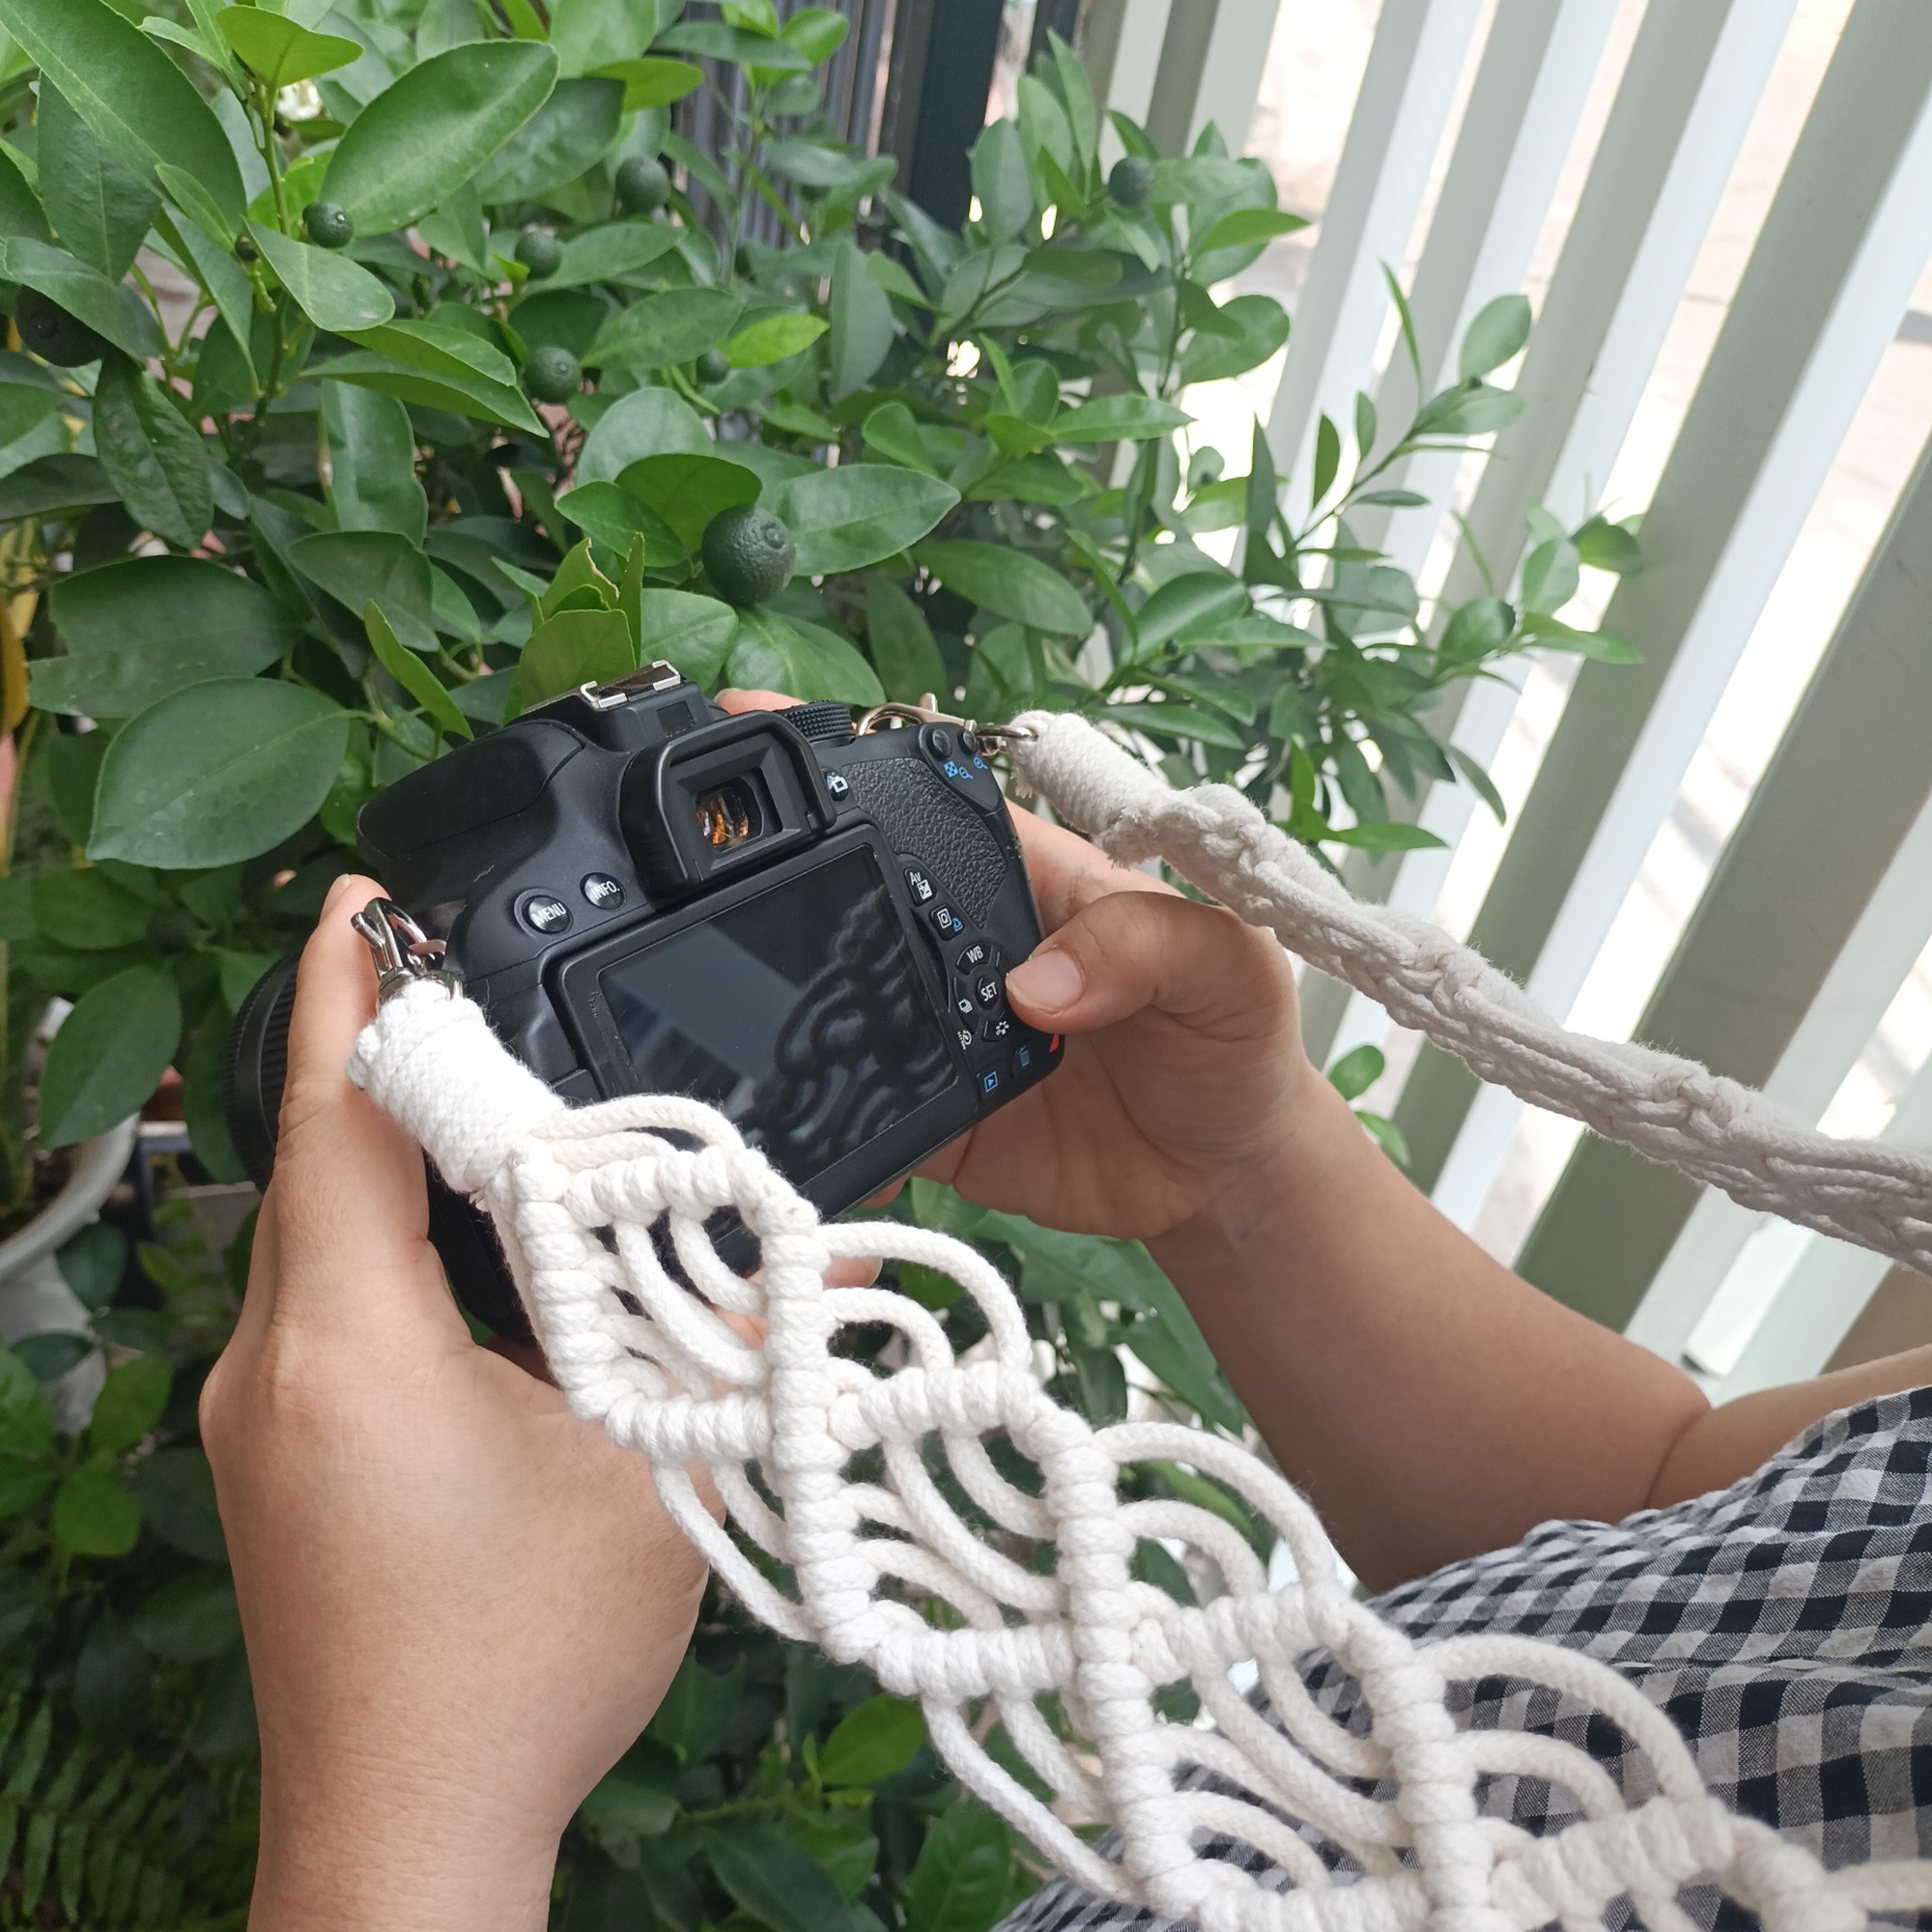 Dây đeo máy ảnh dành cho máy Fuji, Canon, Nikon, Sony.. - Macrame Camera Strap - Made by Kieu Handmade